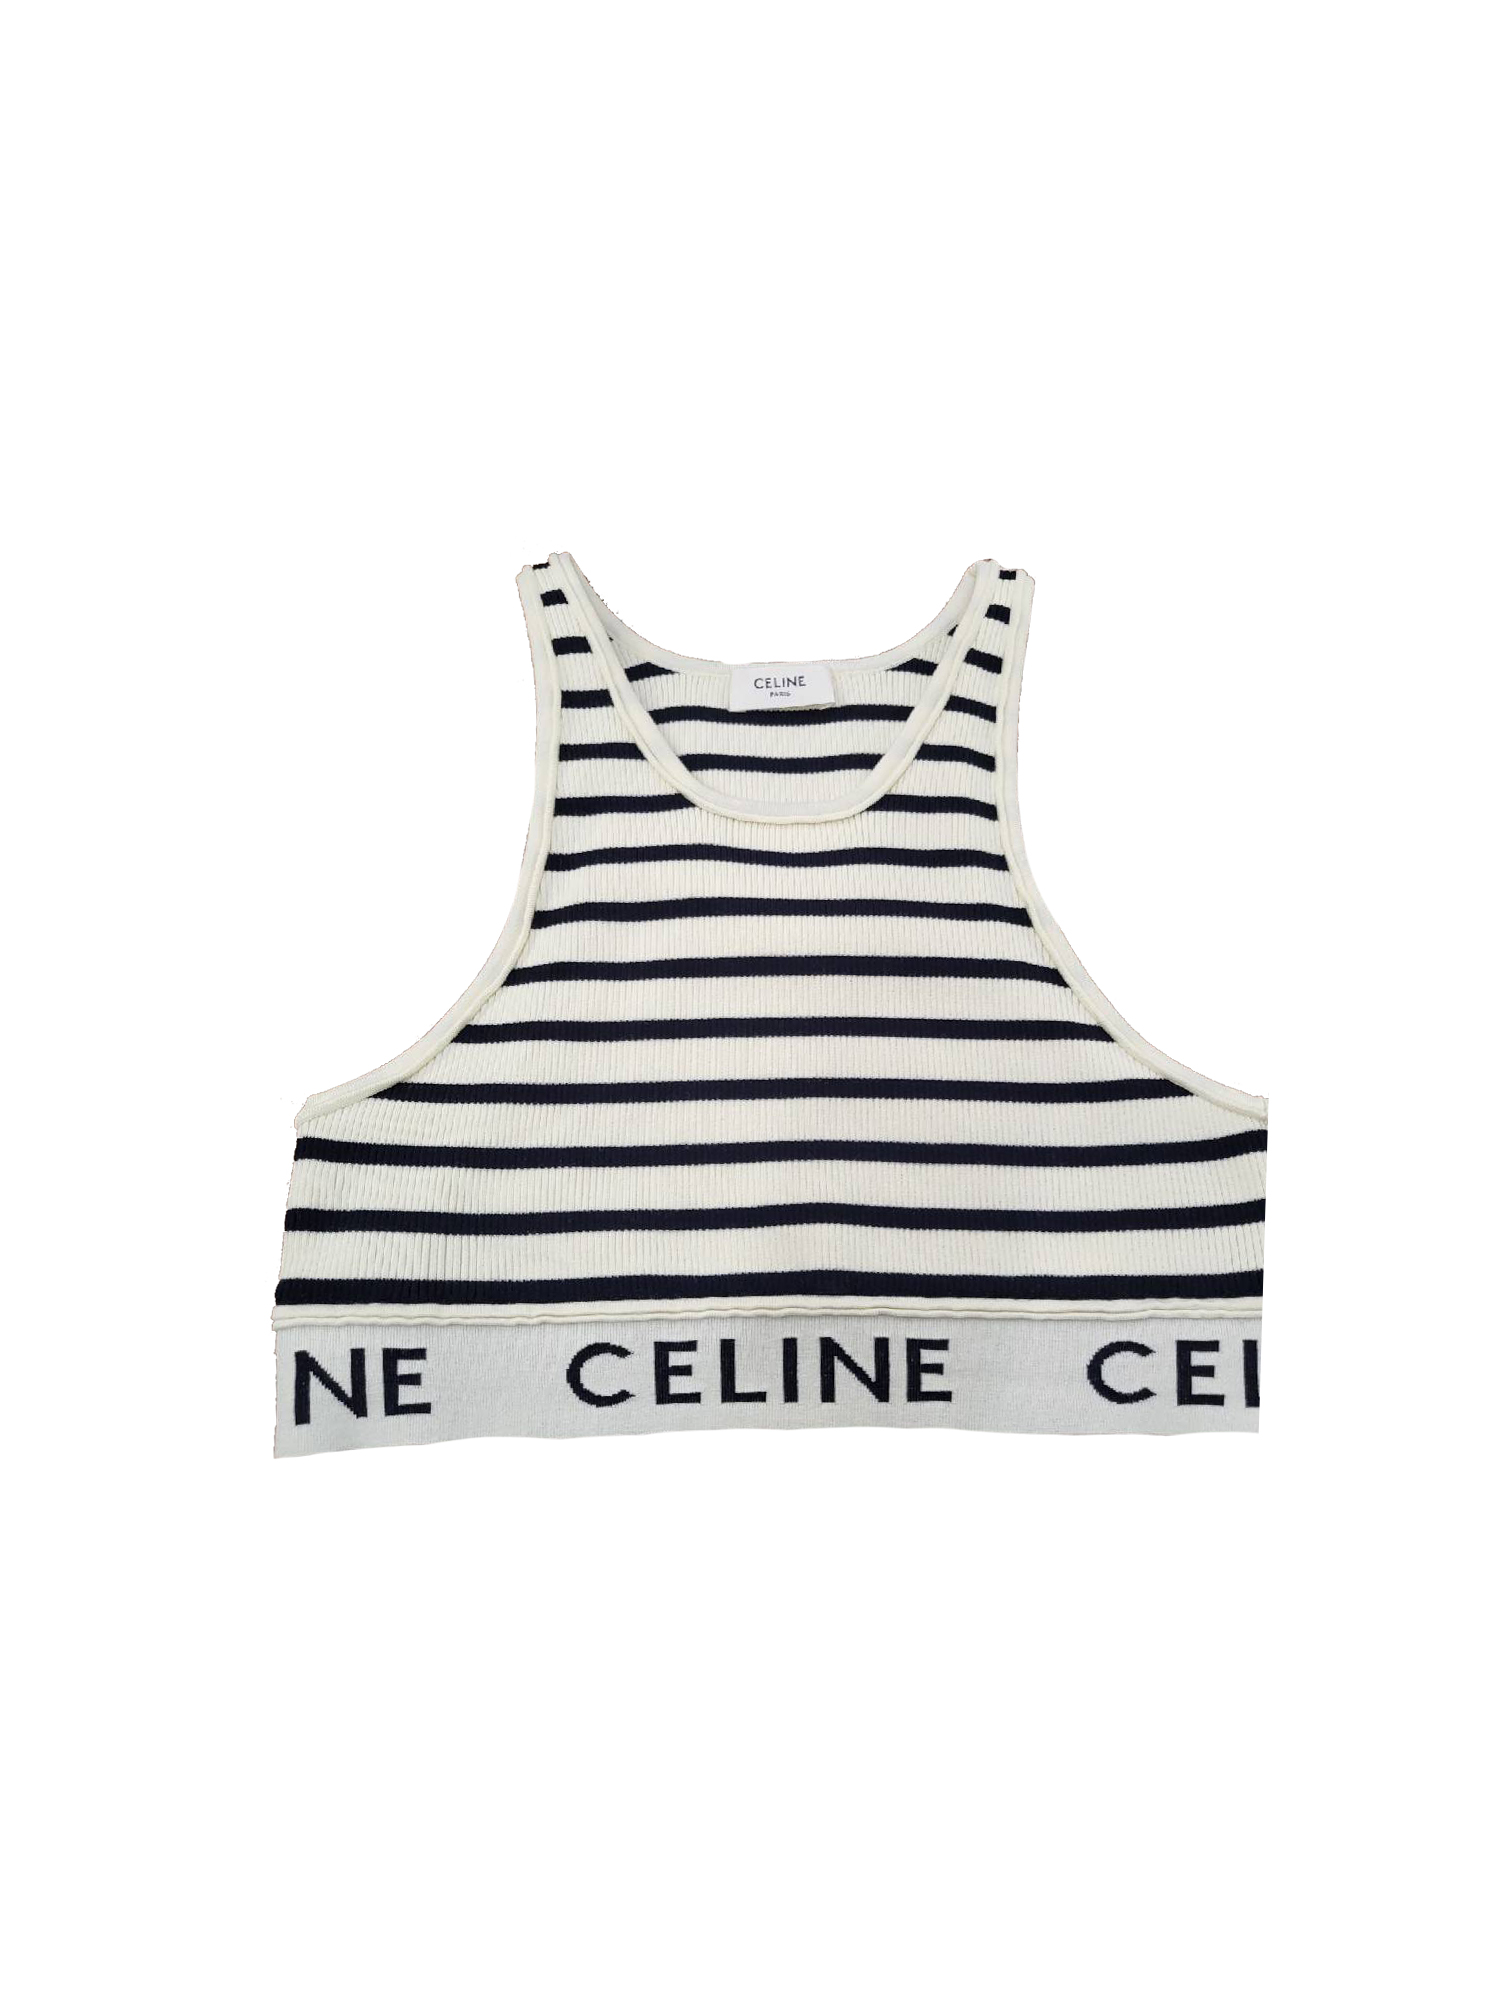 Celine Sports Bra Striped Size S